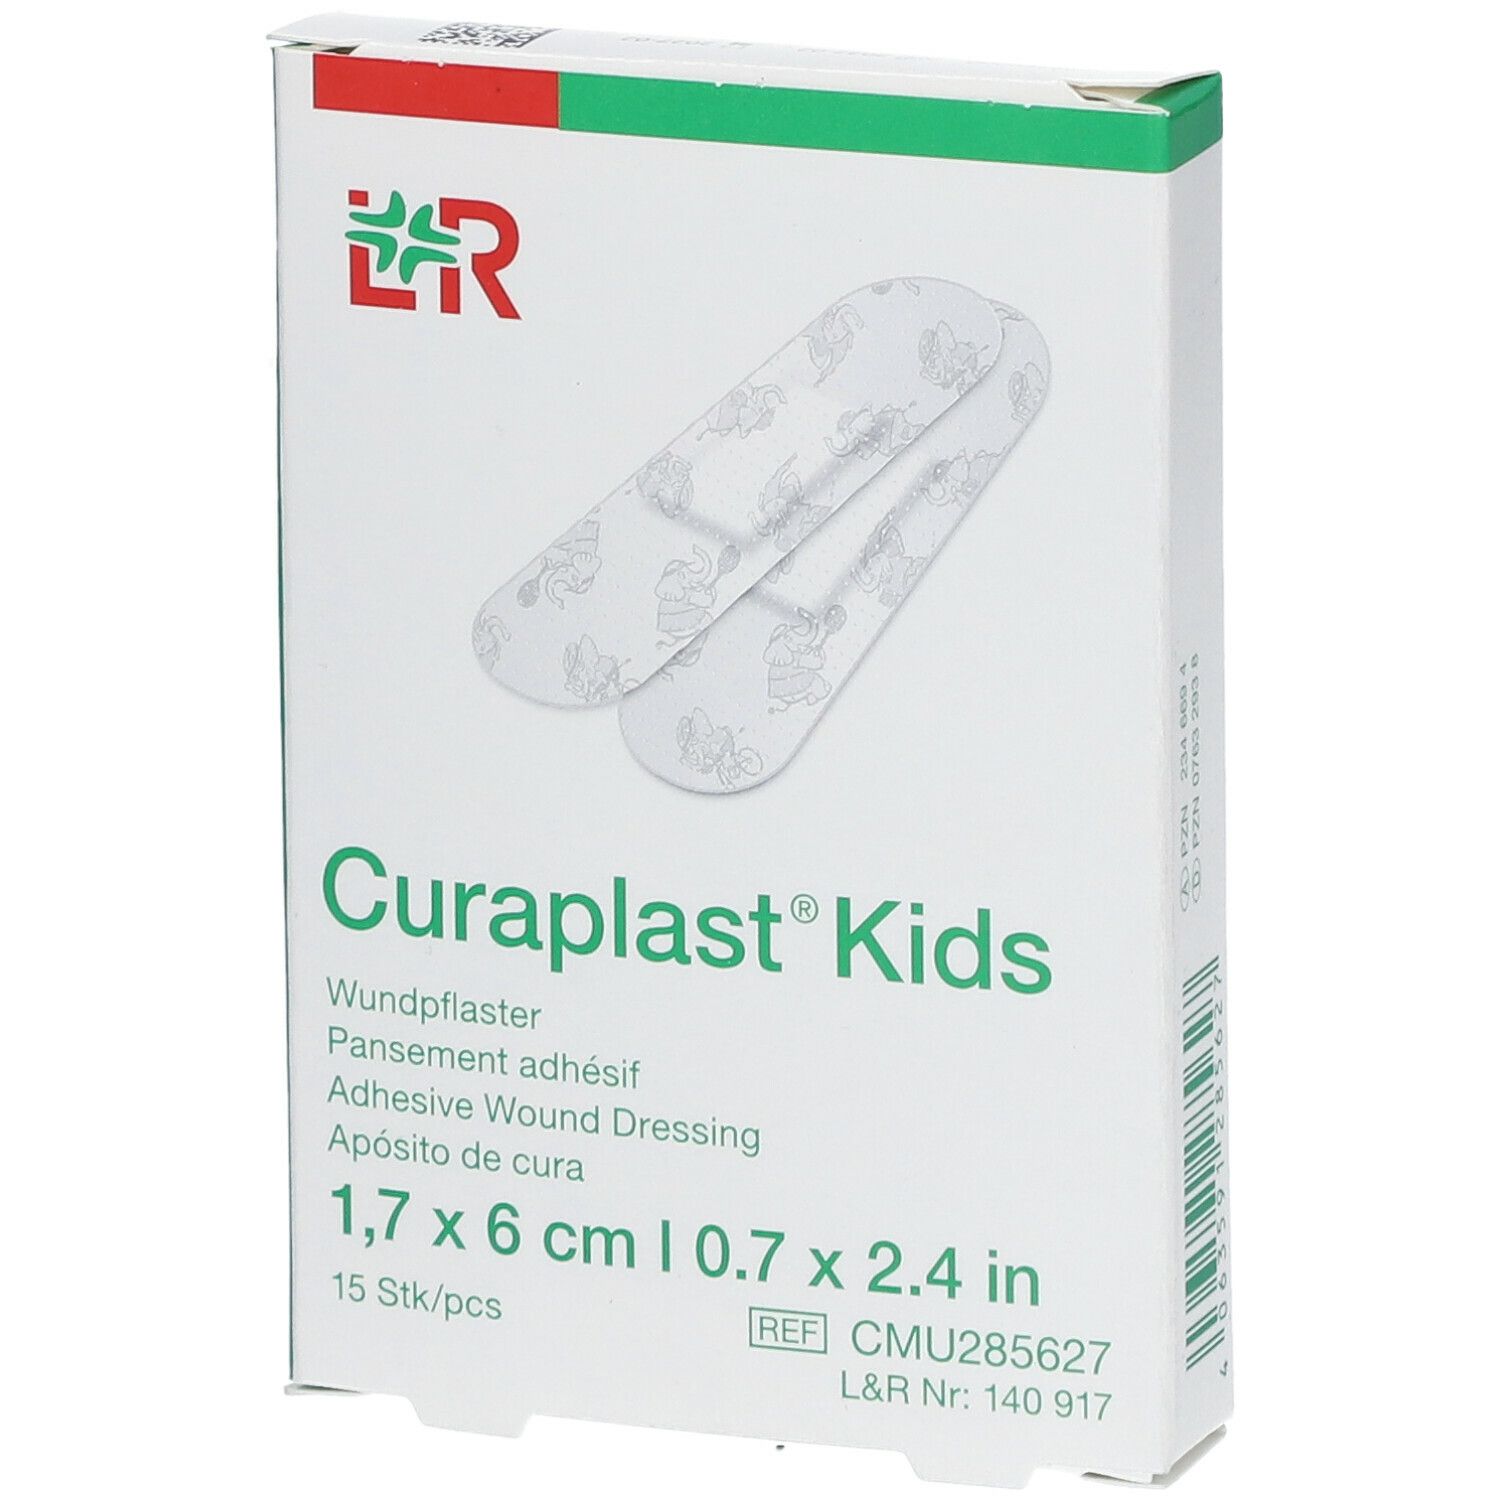 Curaplast® Kids Pansement adhésif 1,7 x 6 cm